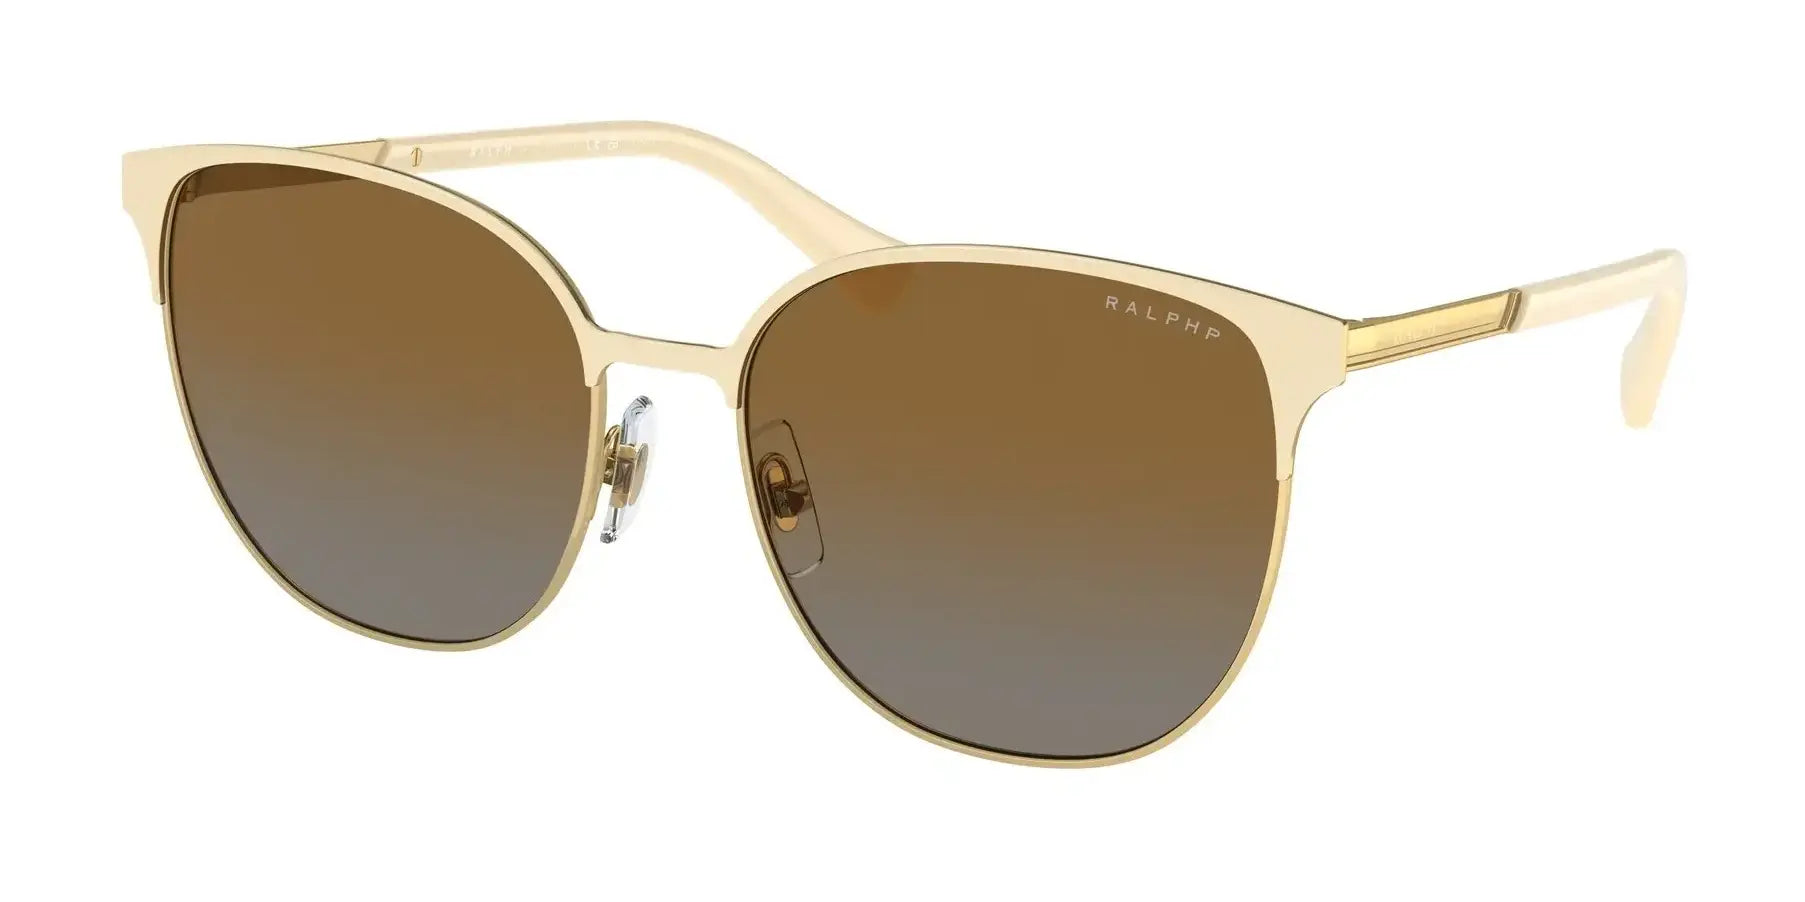 Ralph RA4140 Sunglasses Semi Shiny Cream / Brown Gradient Polarized